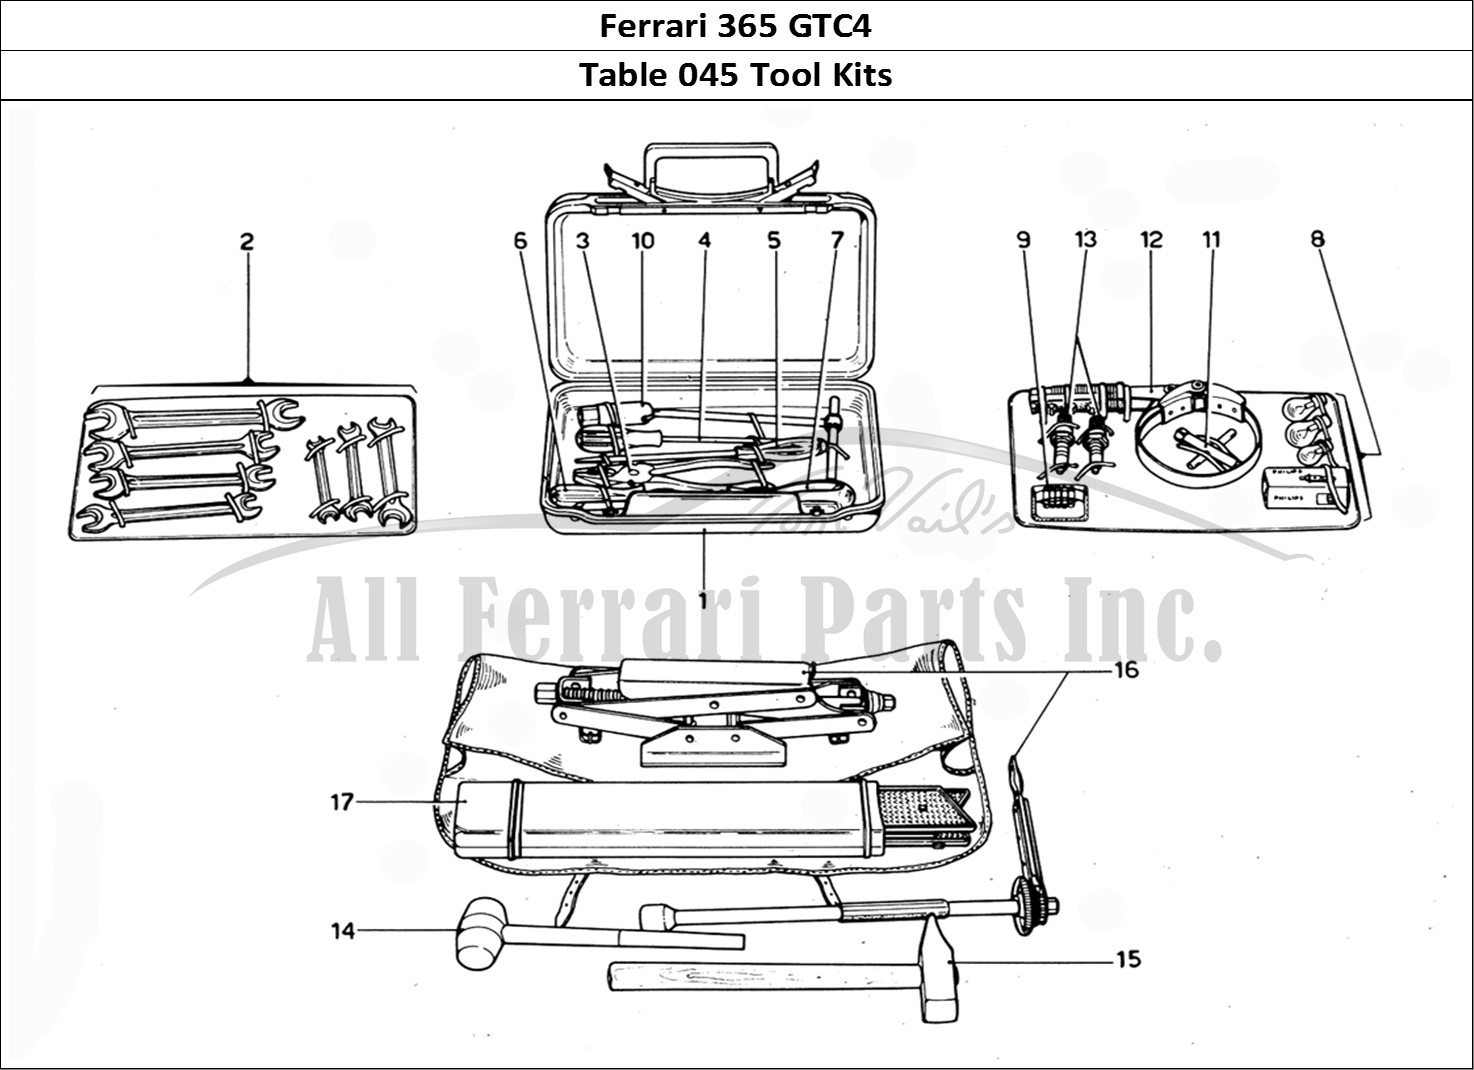 Ferrari Parts Ferrari 365 GTC4 (Mechanical) Page 045 Tool kits